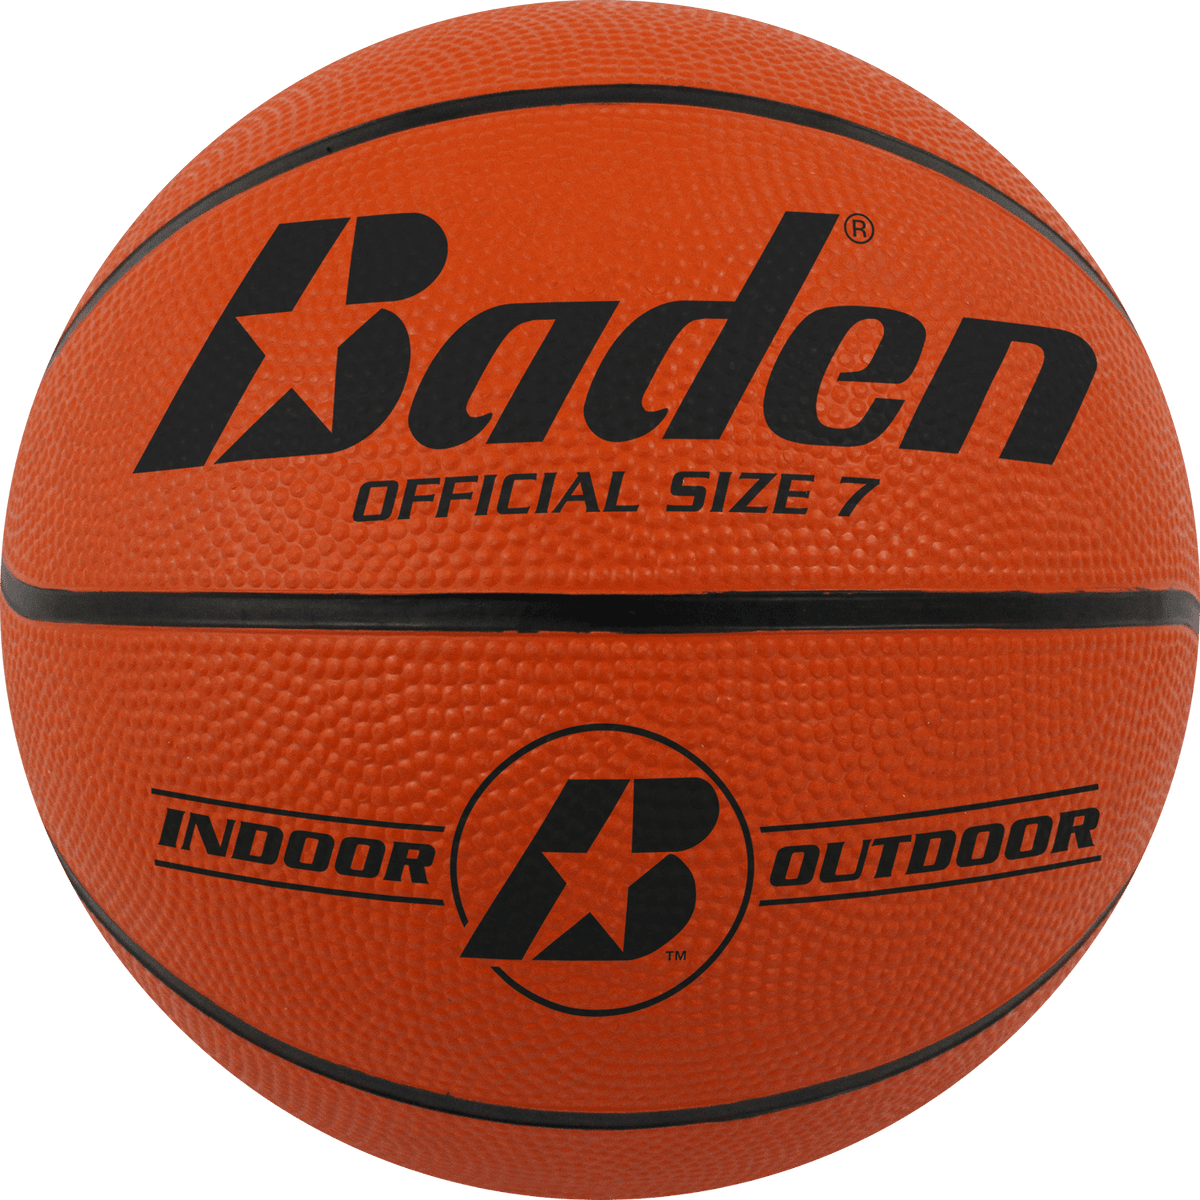 Bandeau de basket-ball britannique -  Canada